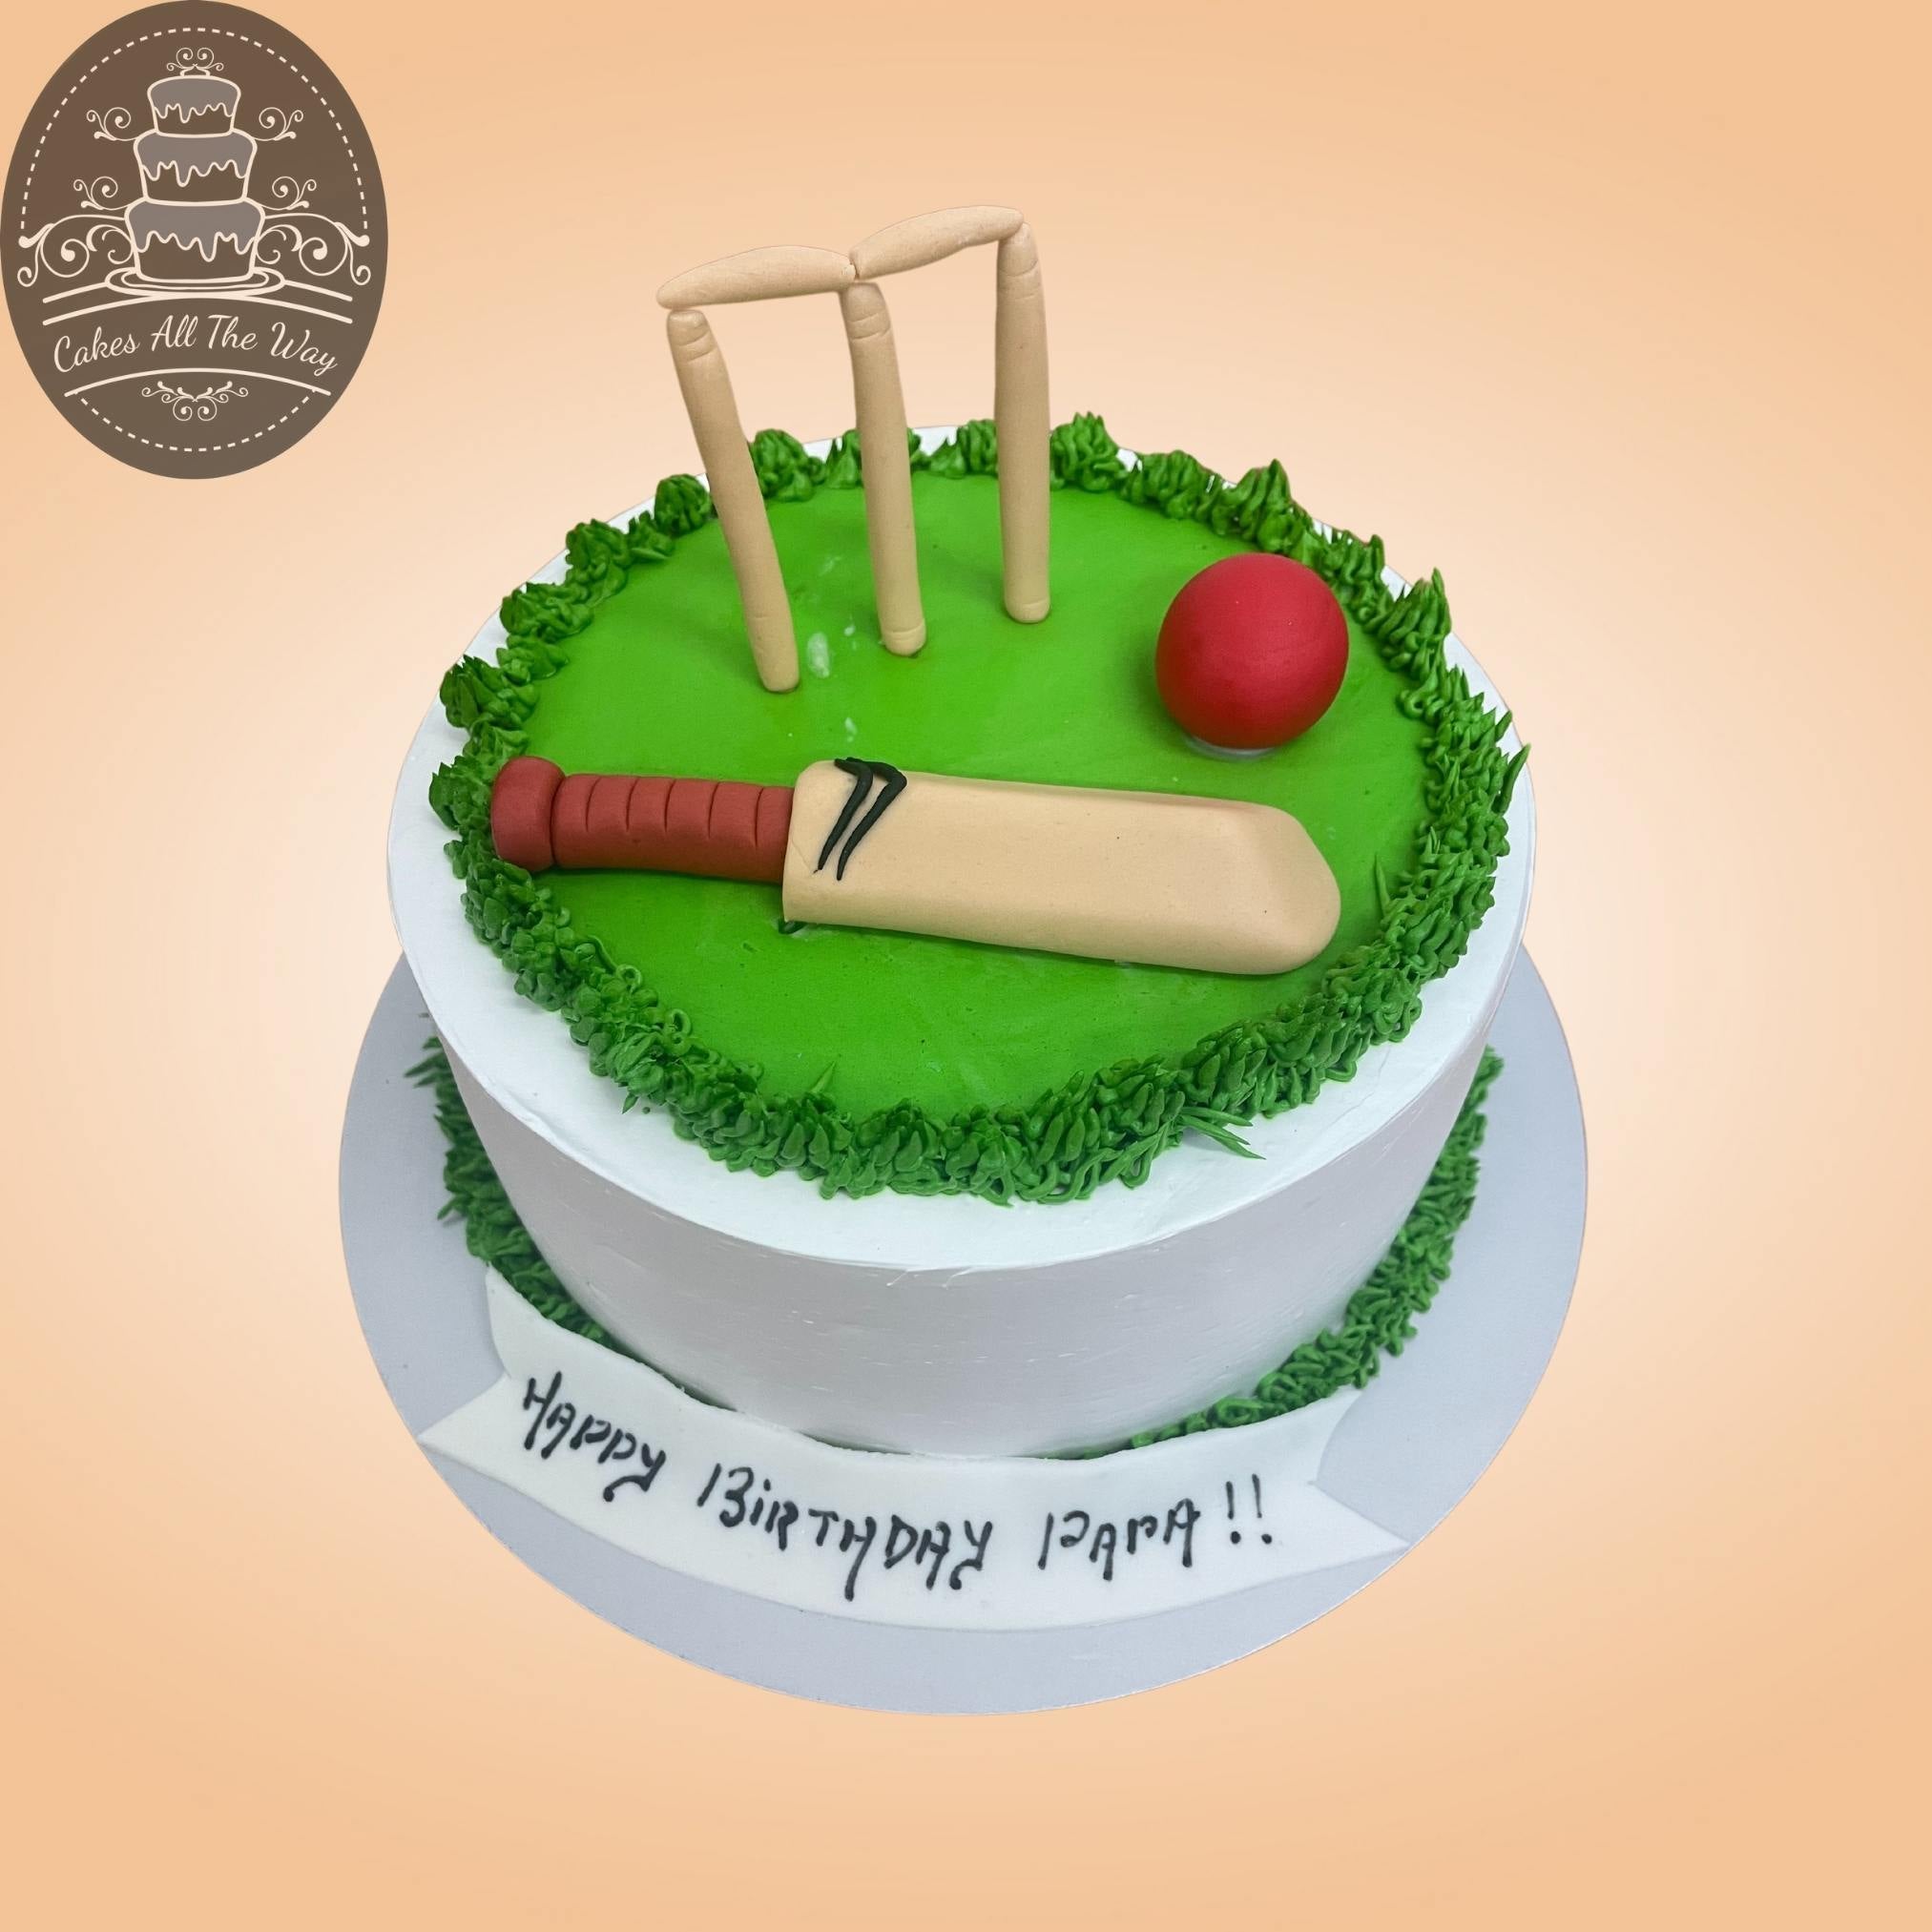 Cricket Cake Design | How To Make Cricket Cake - YouTube